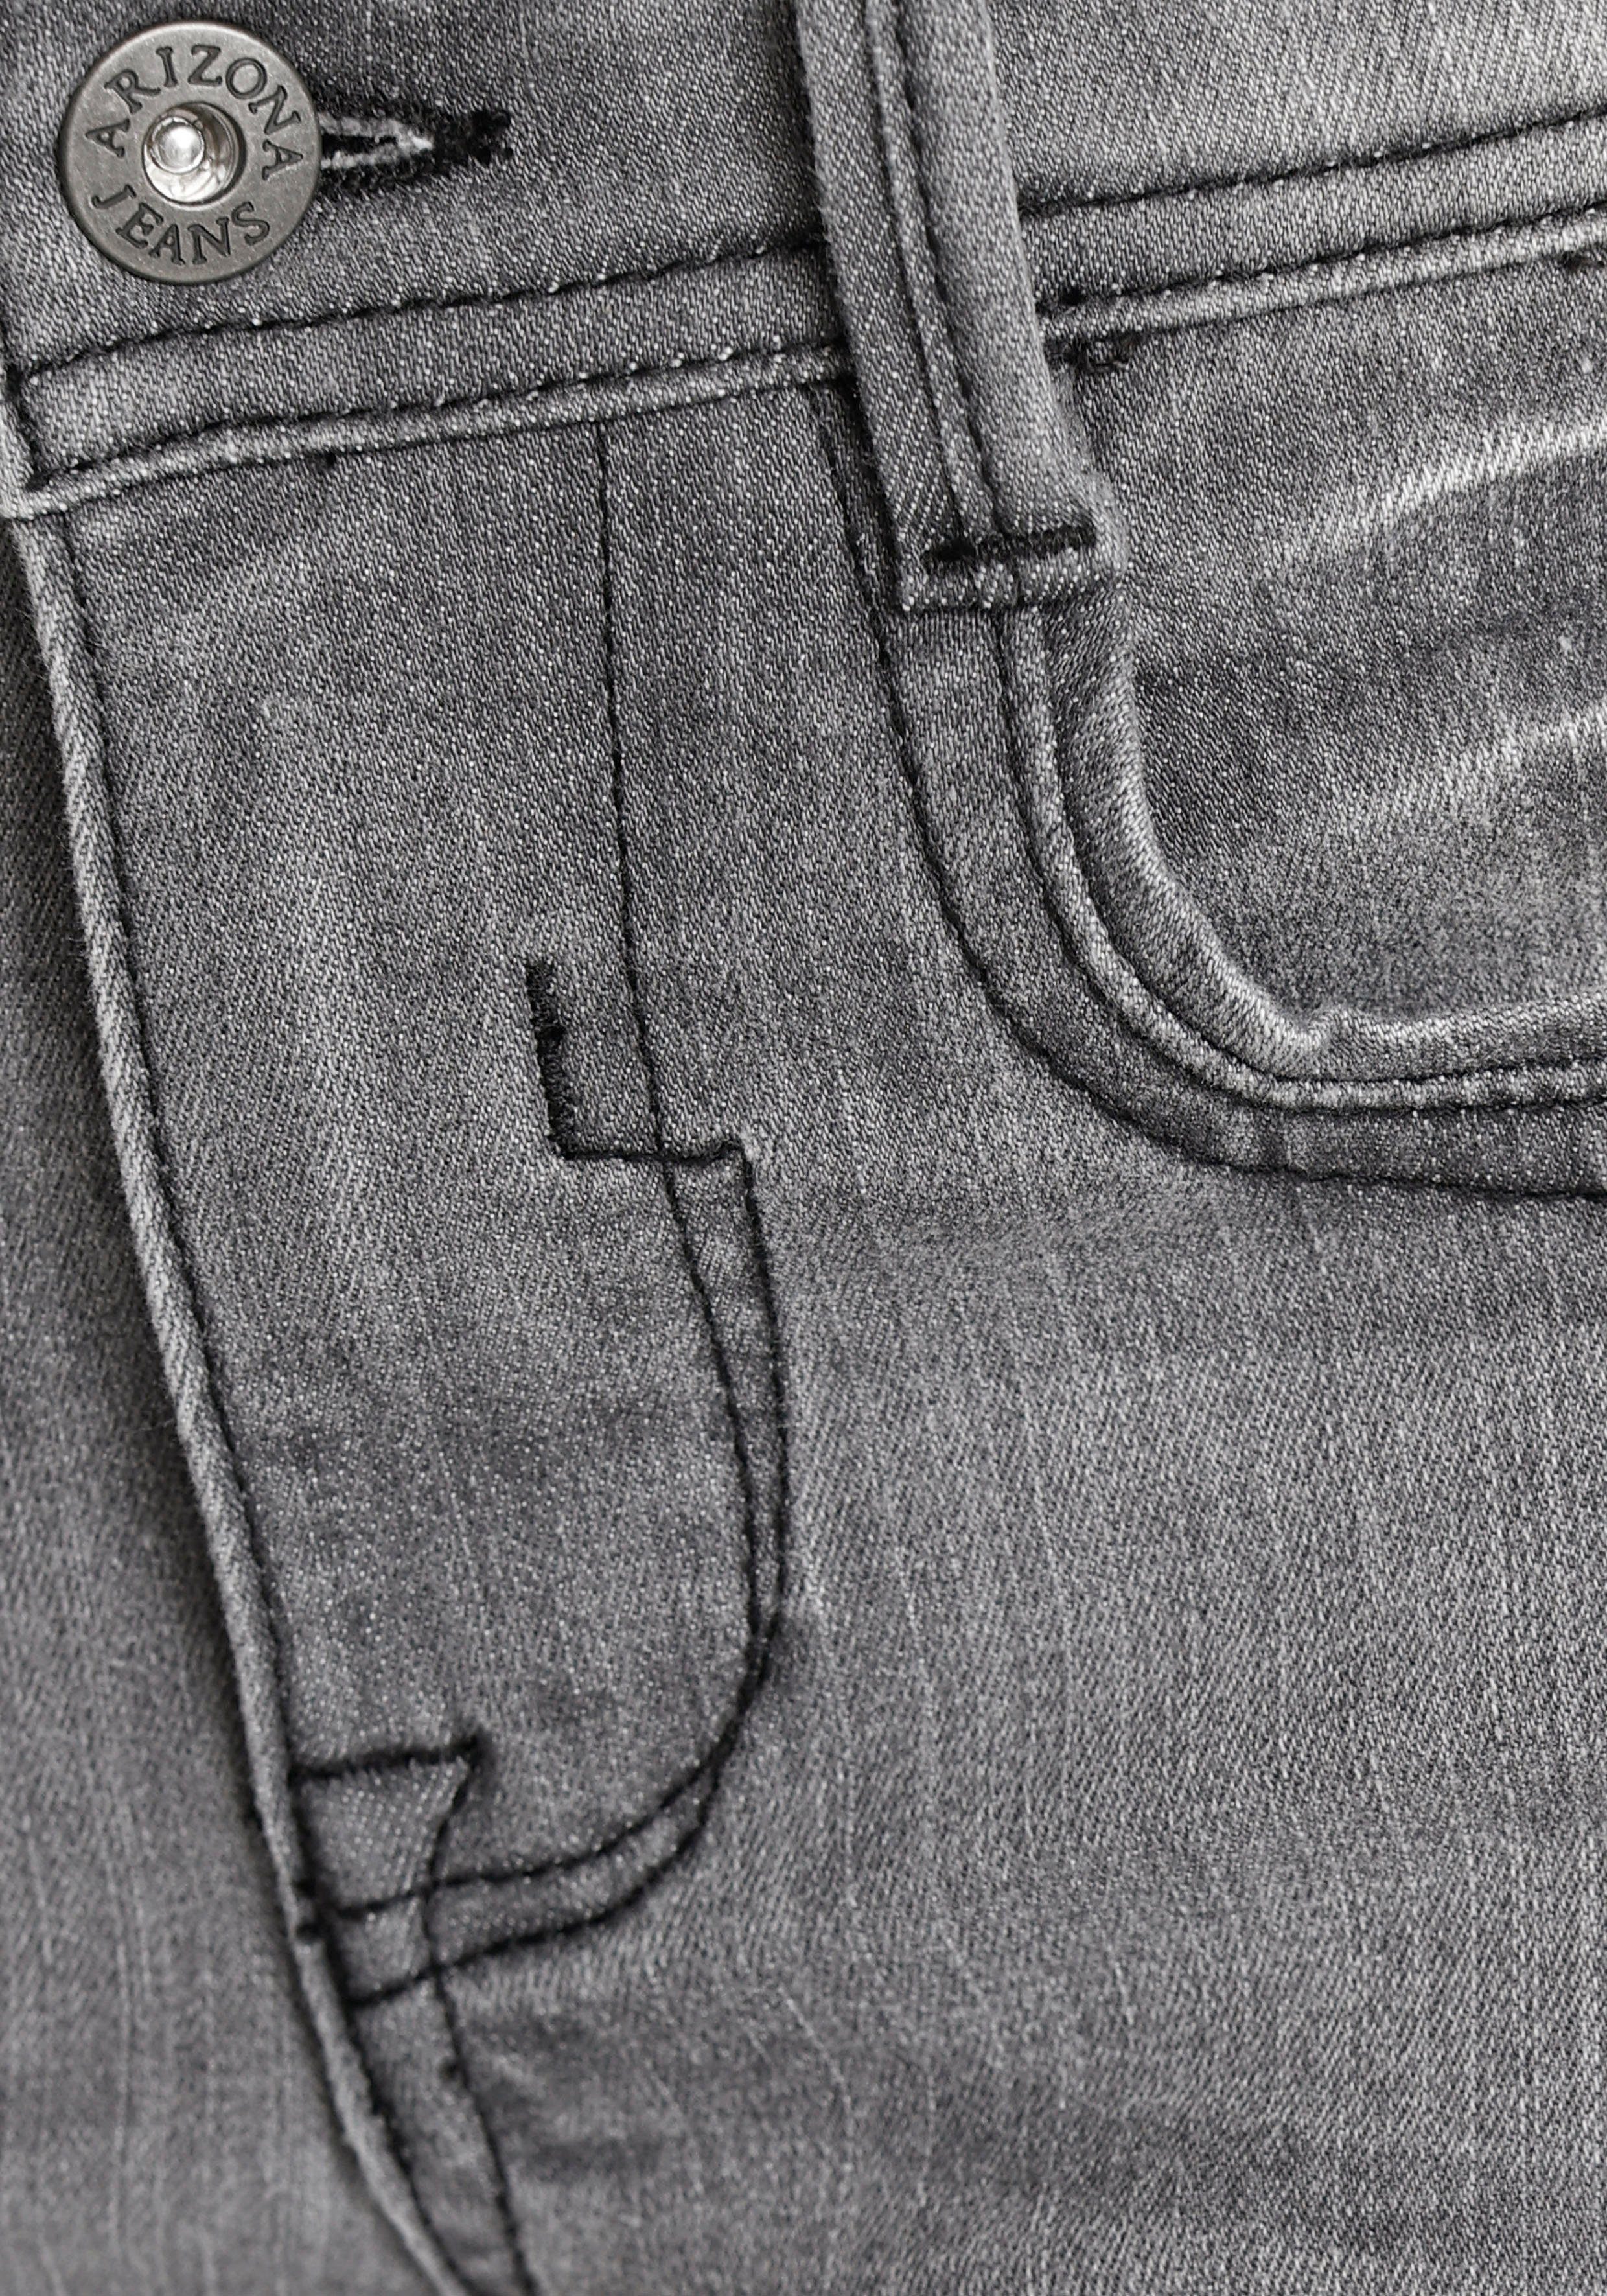 mit Waschung Arizona schmale Stretch-Jeans toller Form